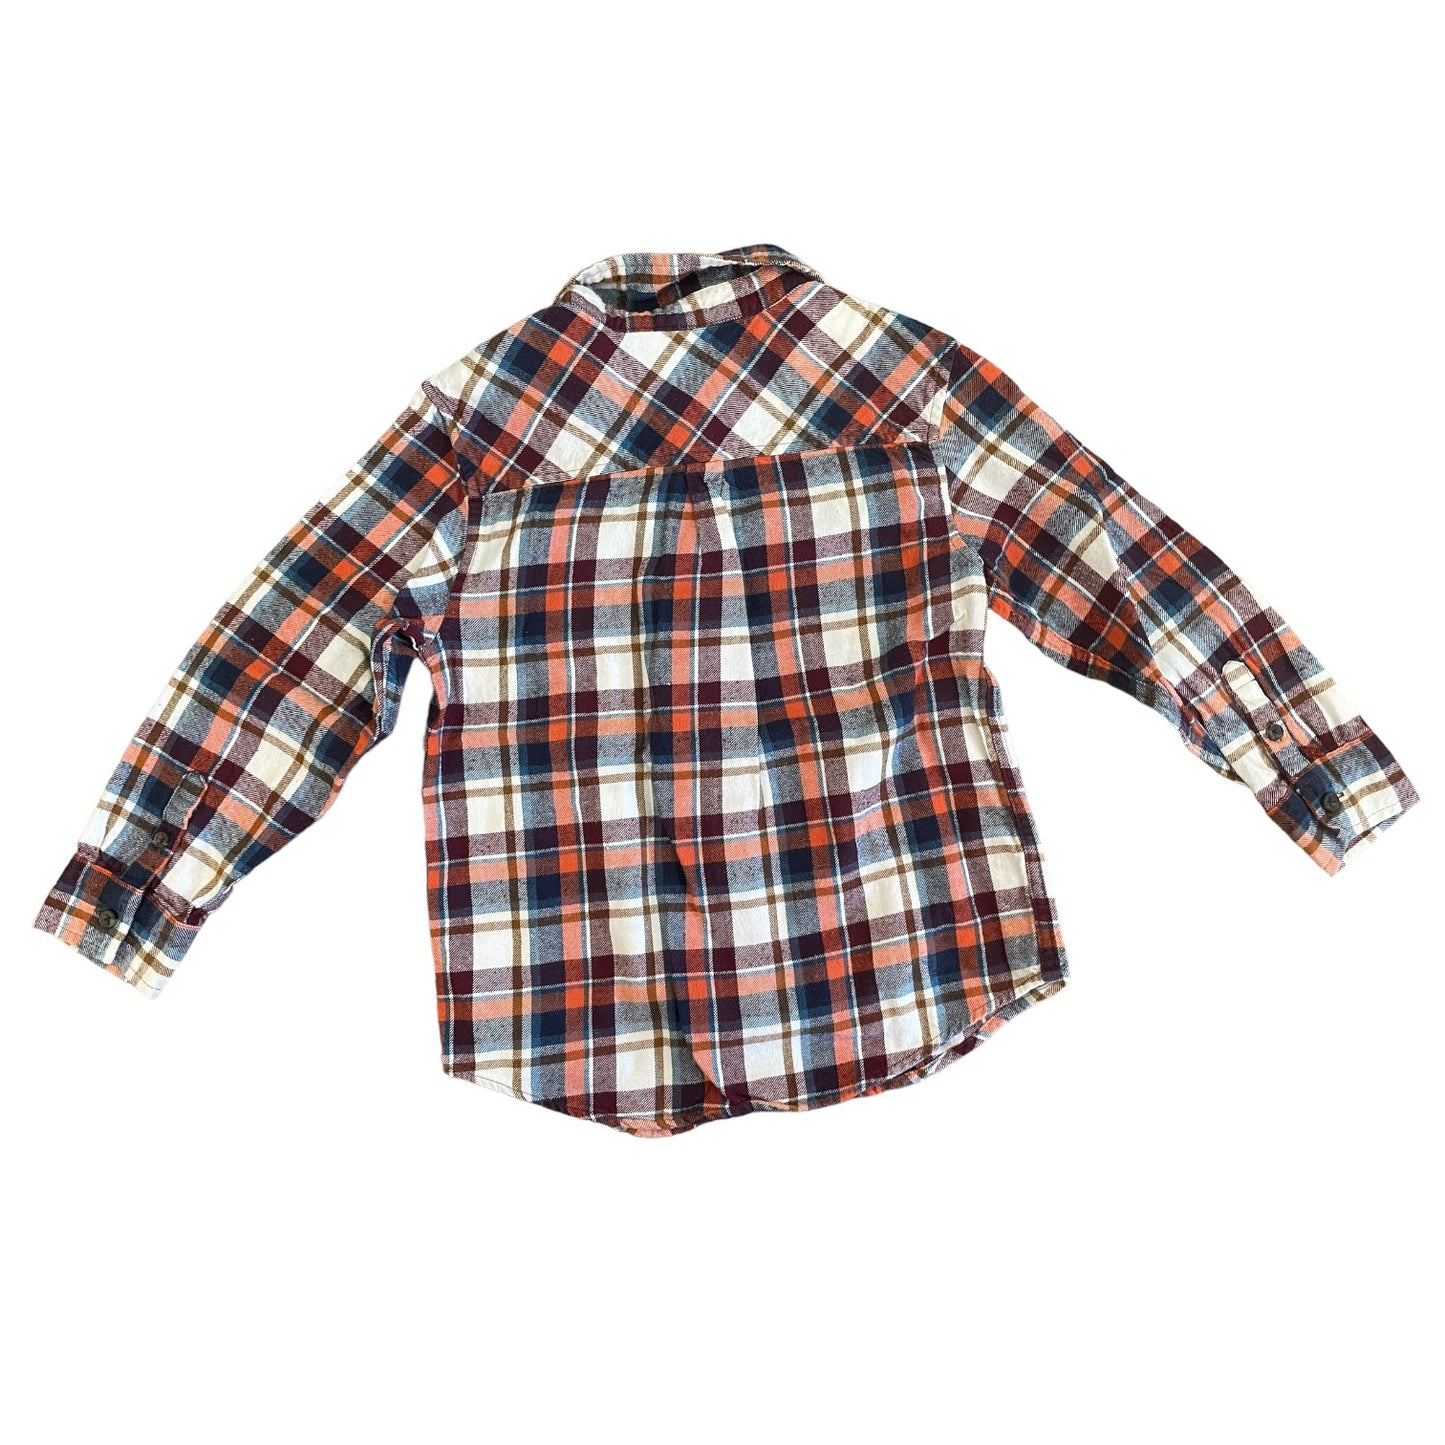 Gymboree Flannel Plaid Long Sleeve Shirt Size 5-6